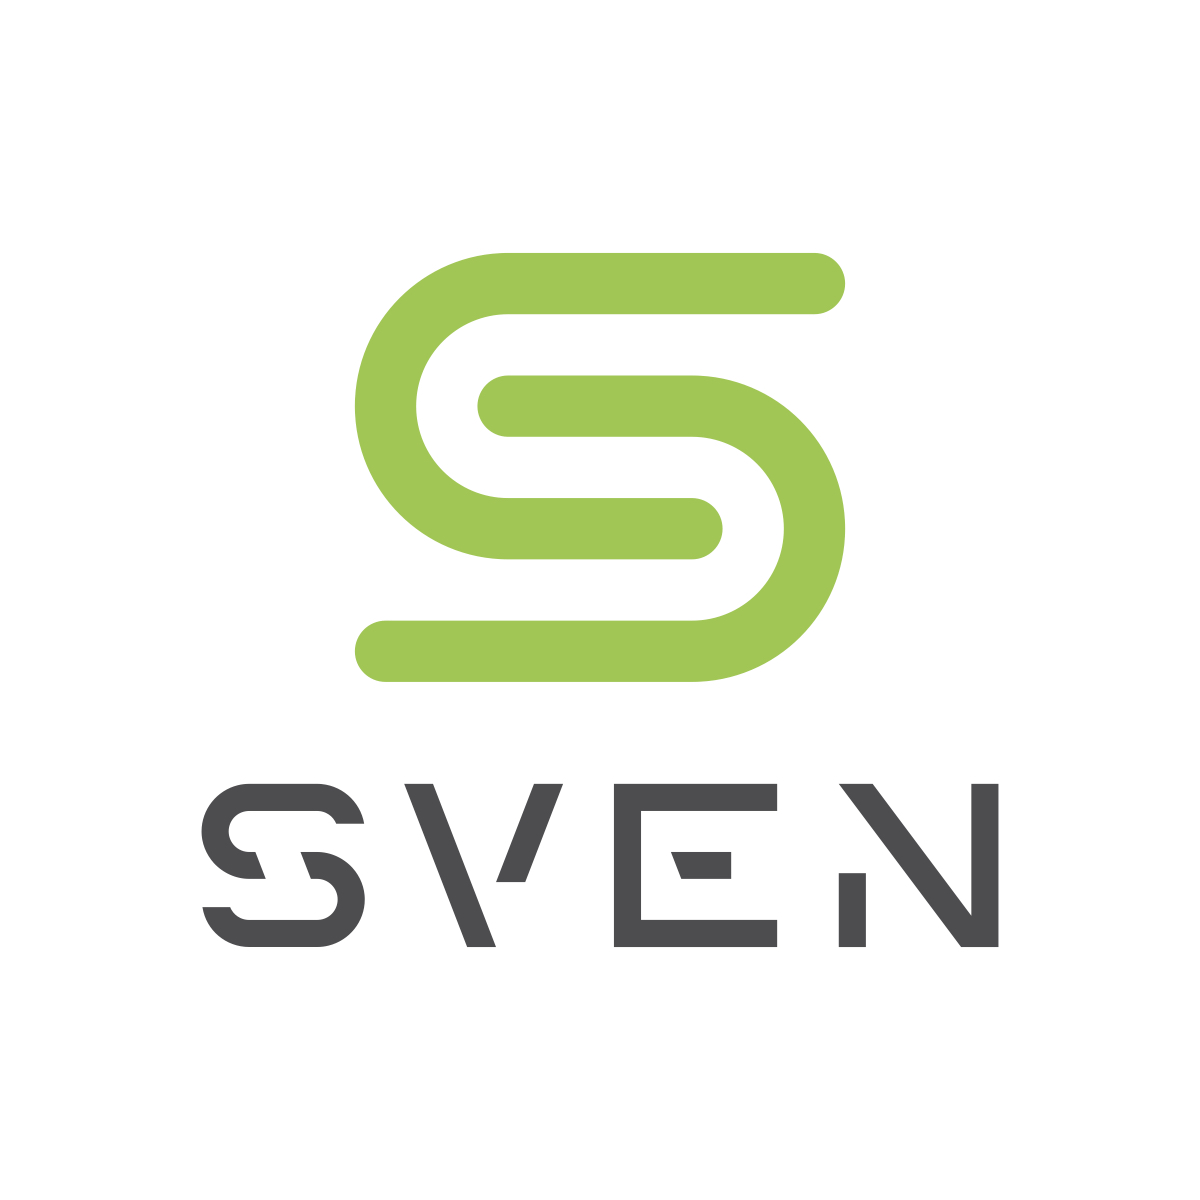 Sevn Logo - Sven Pro